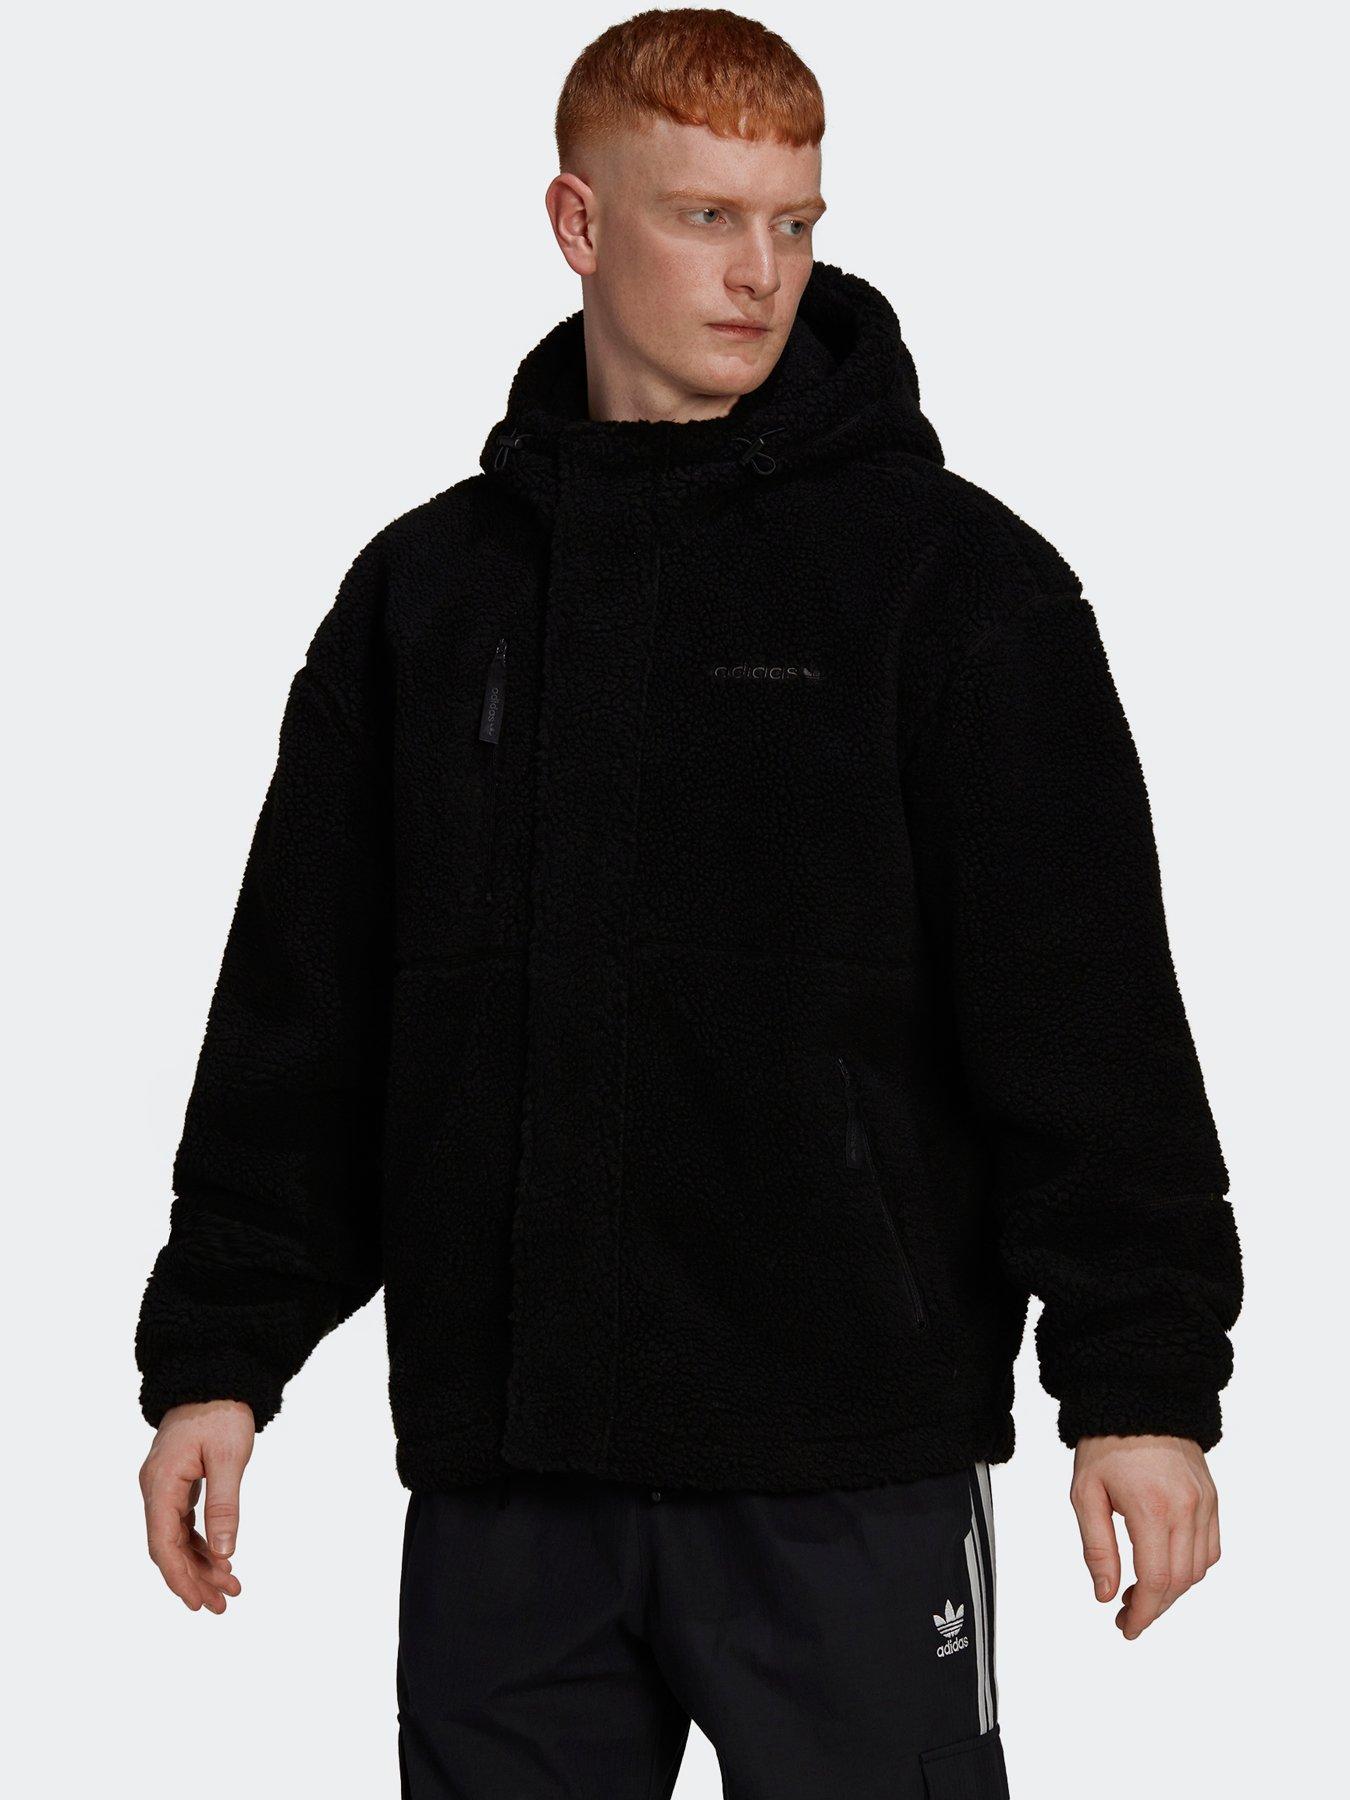 adidas Originals Polar Fleece Storm Jacket, Black, Size Xs, Men